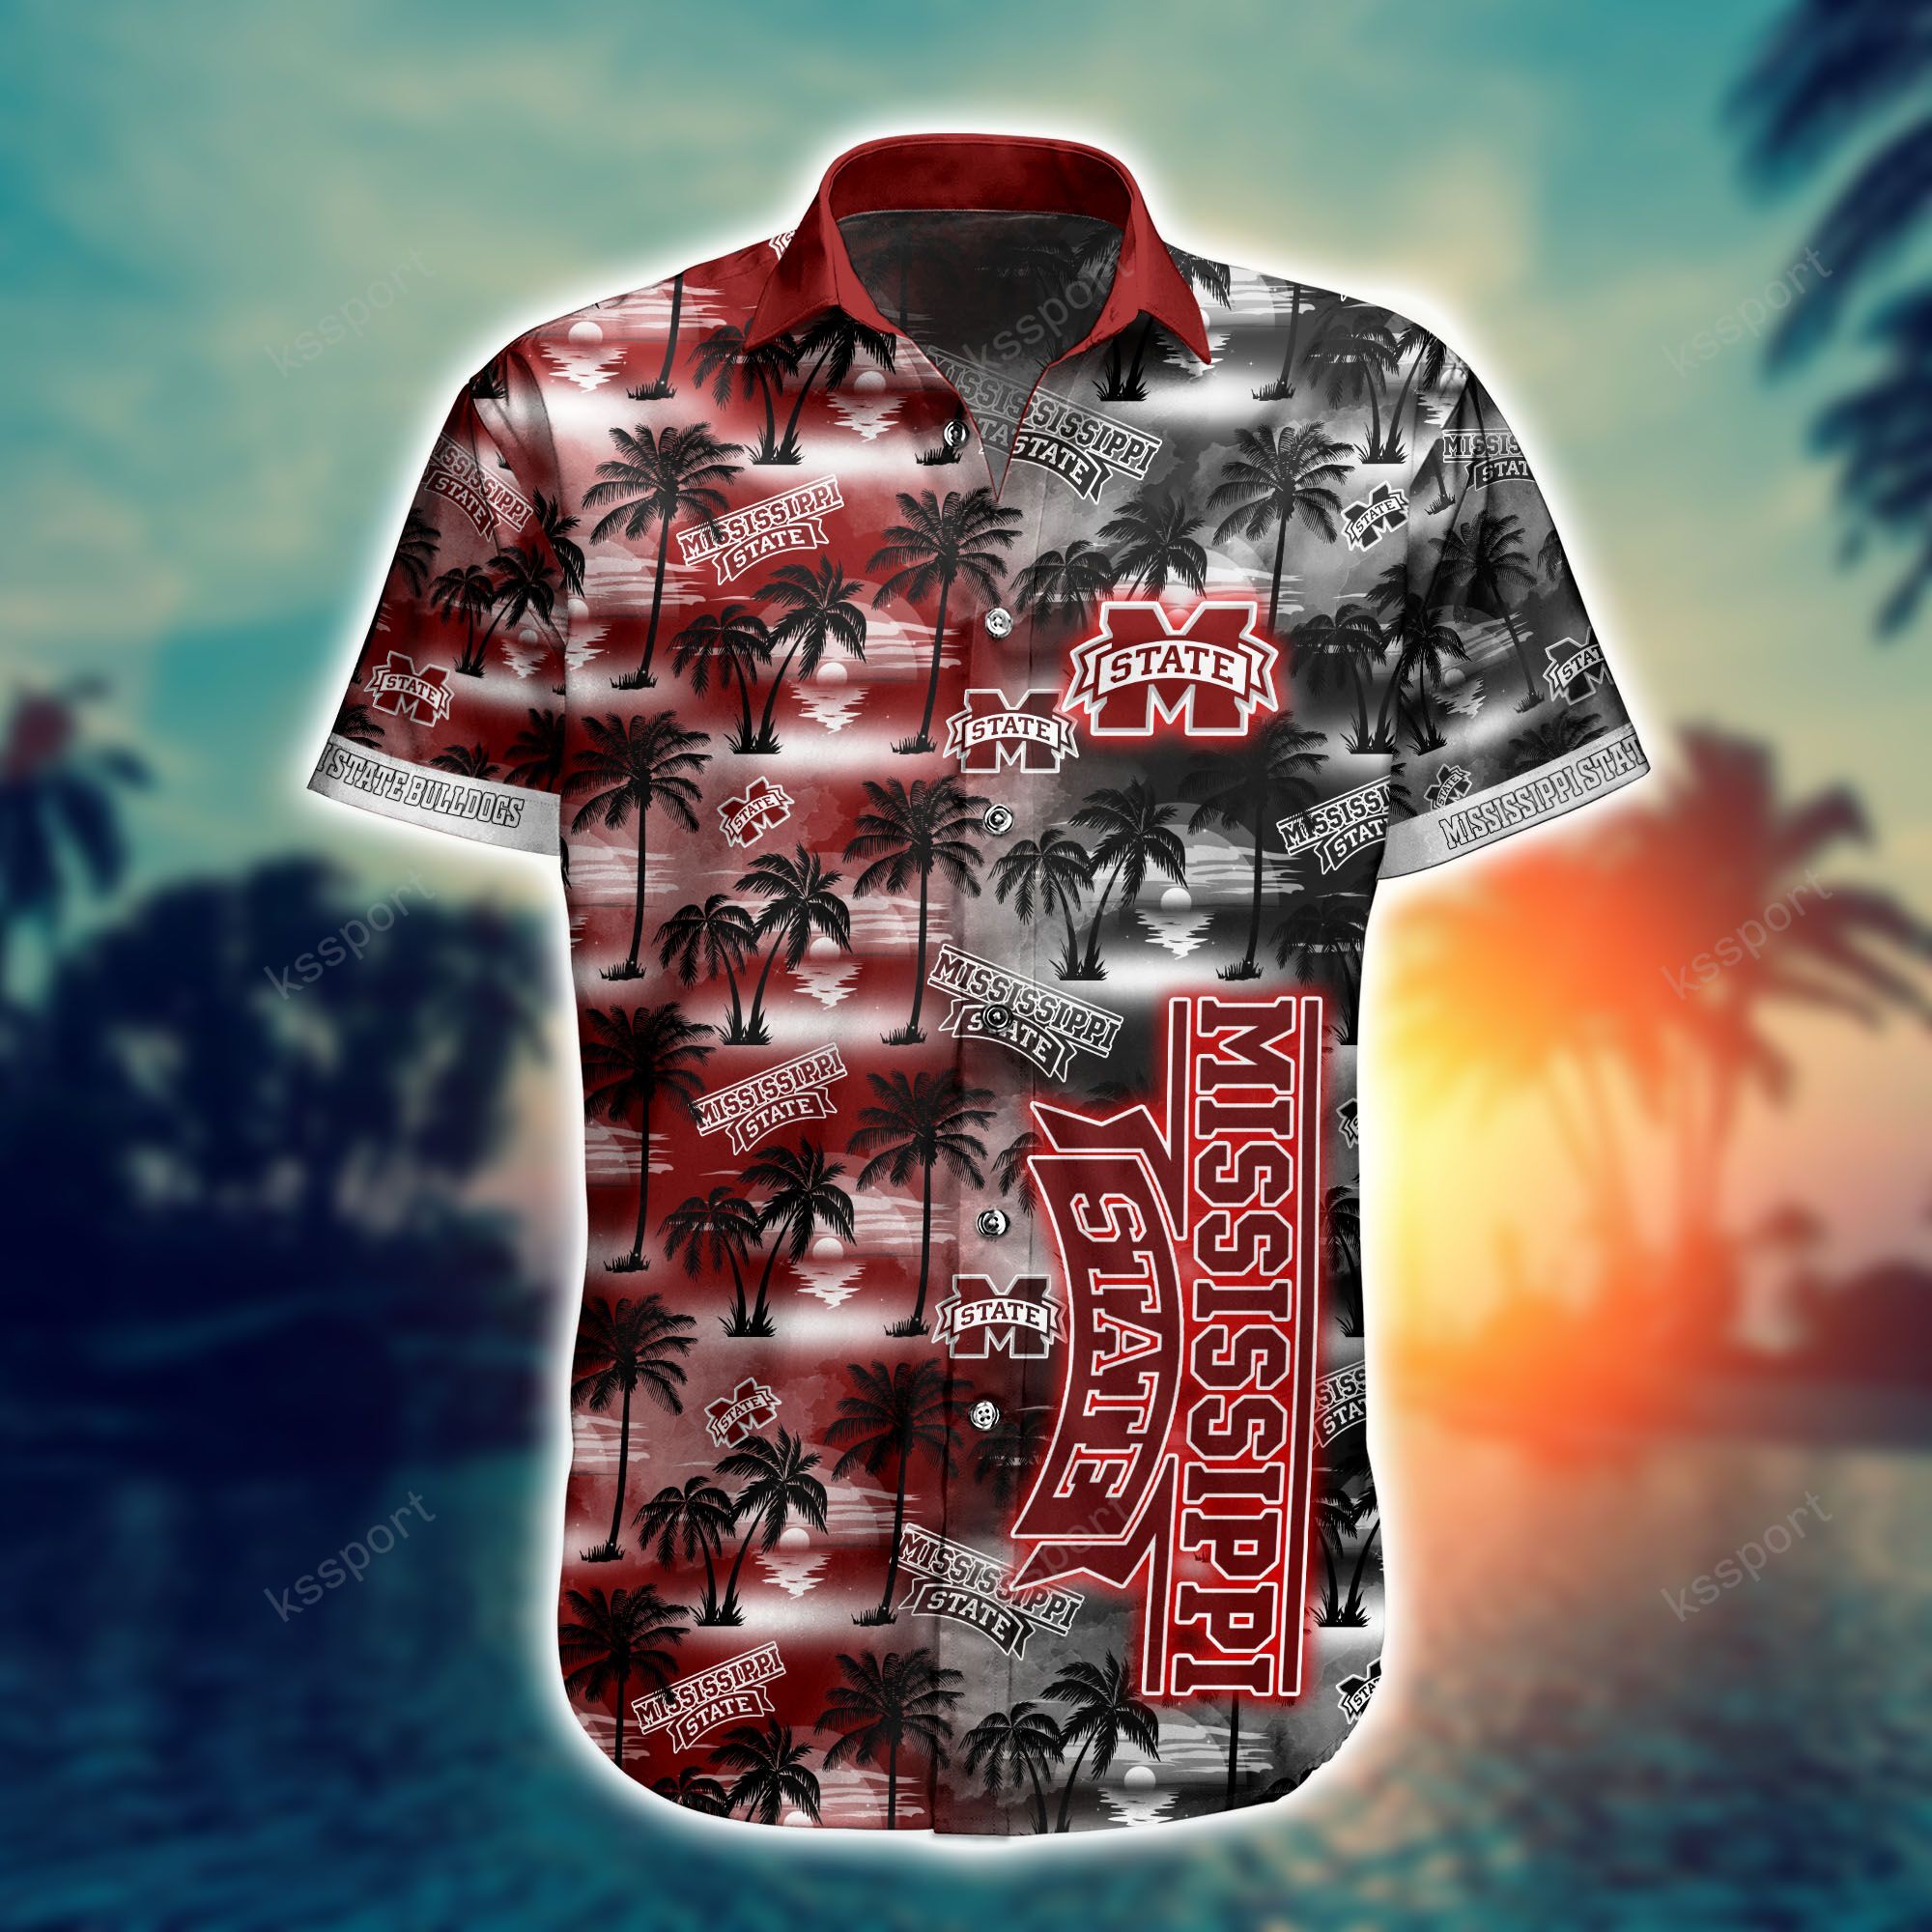 Hawaiian shirt and shorts is a great way to look stylish at a beach party 13